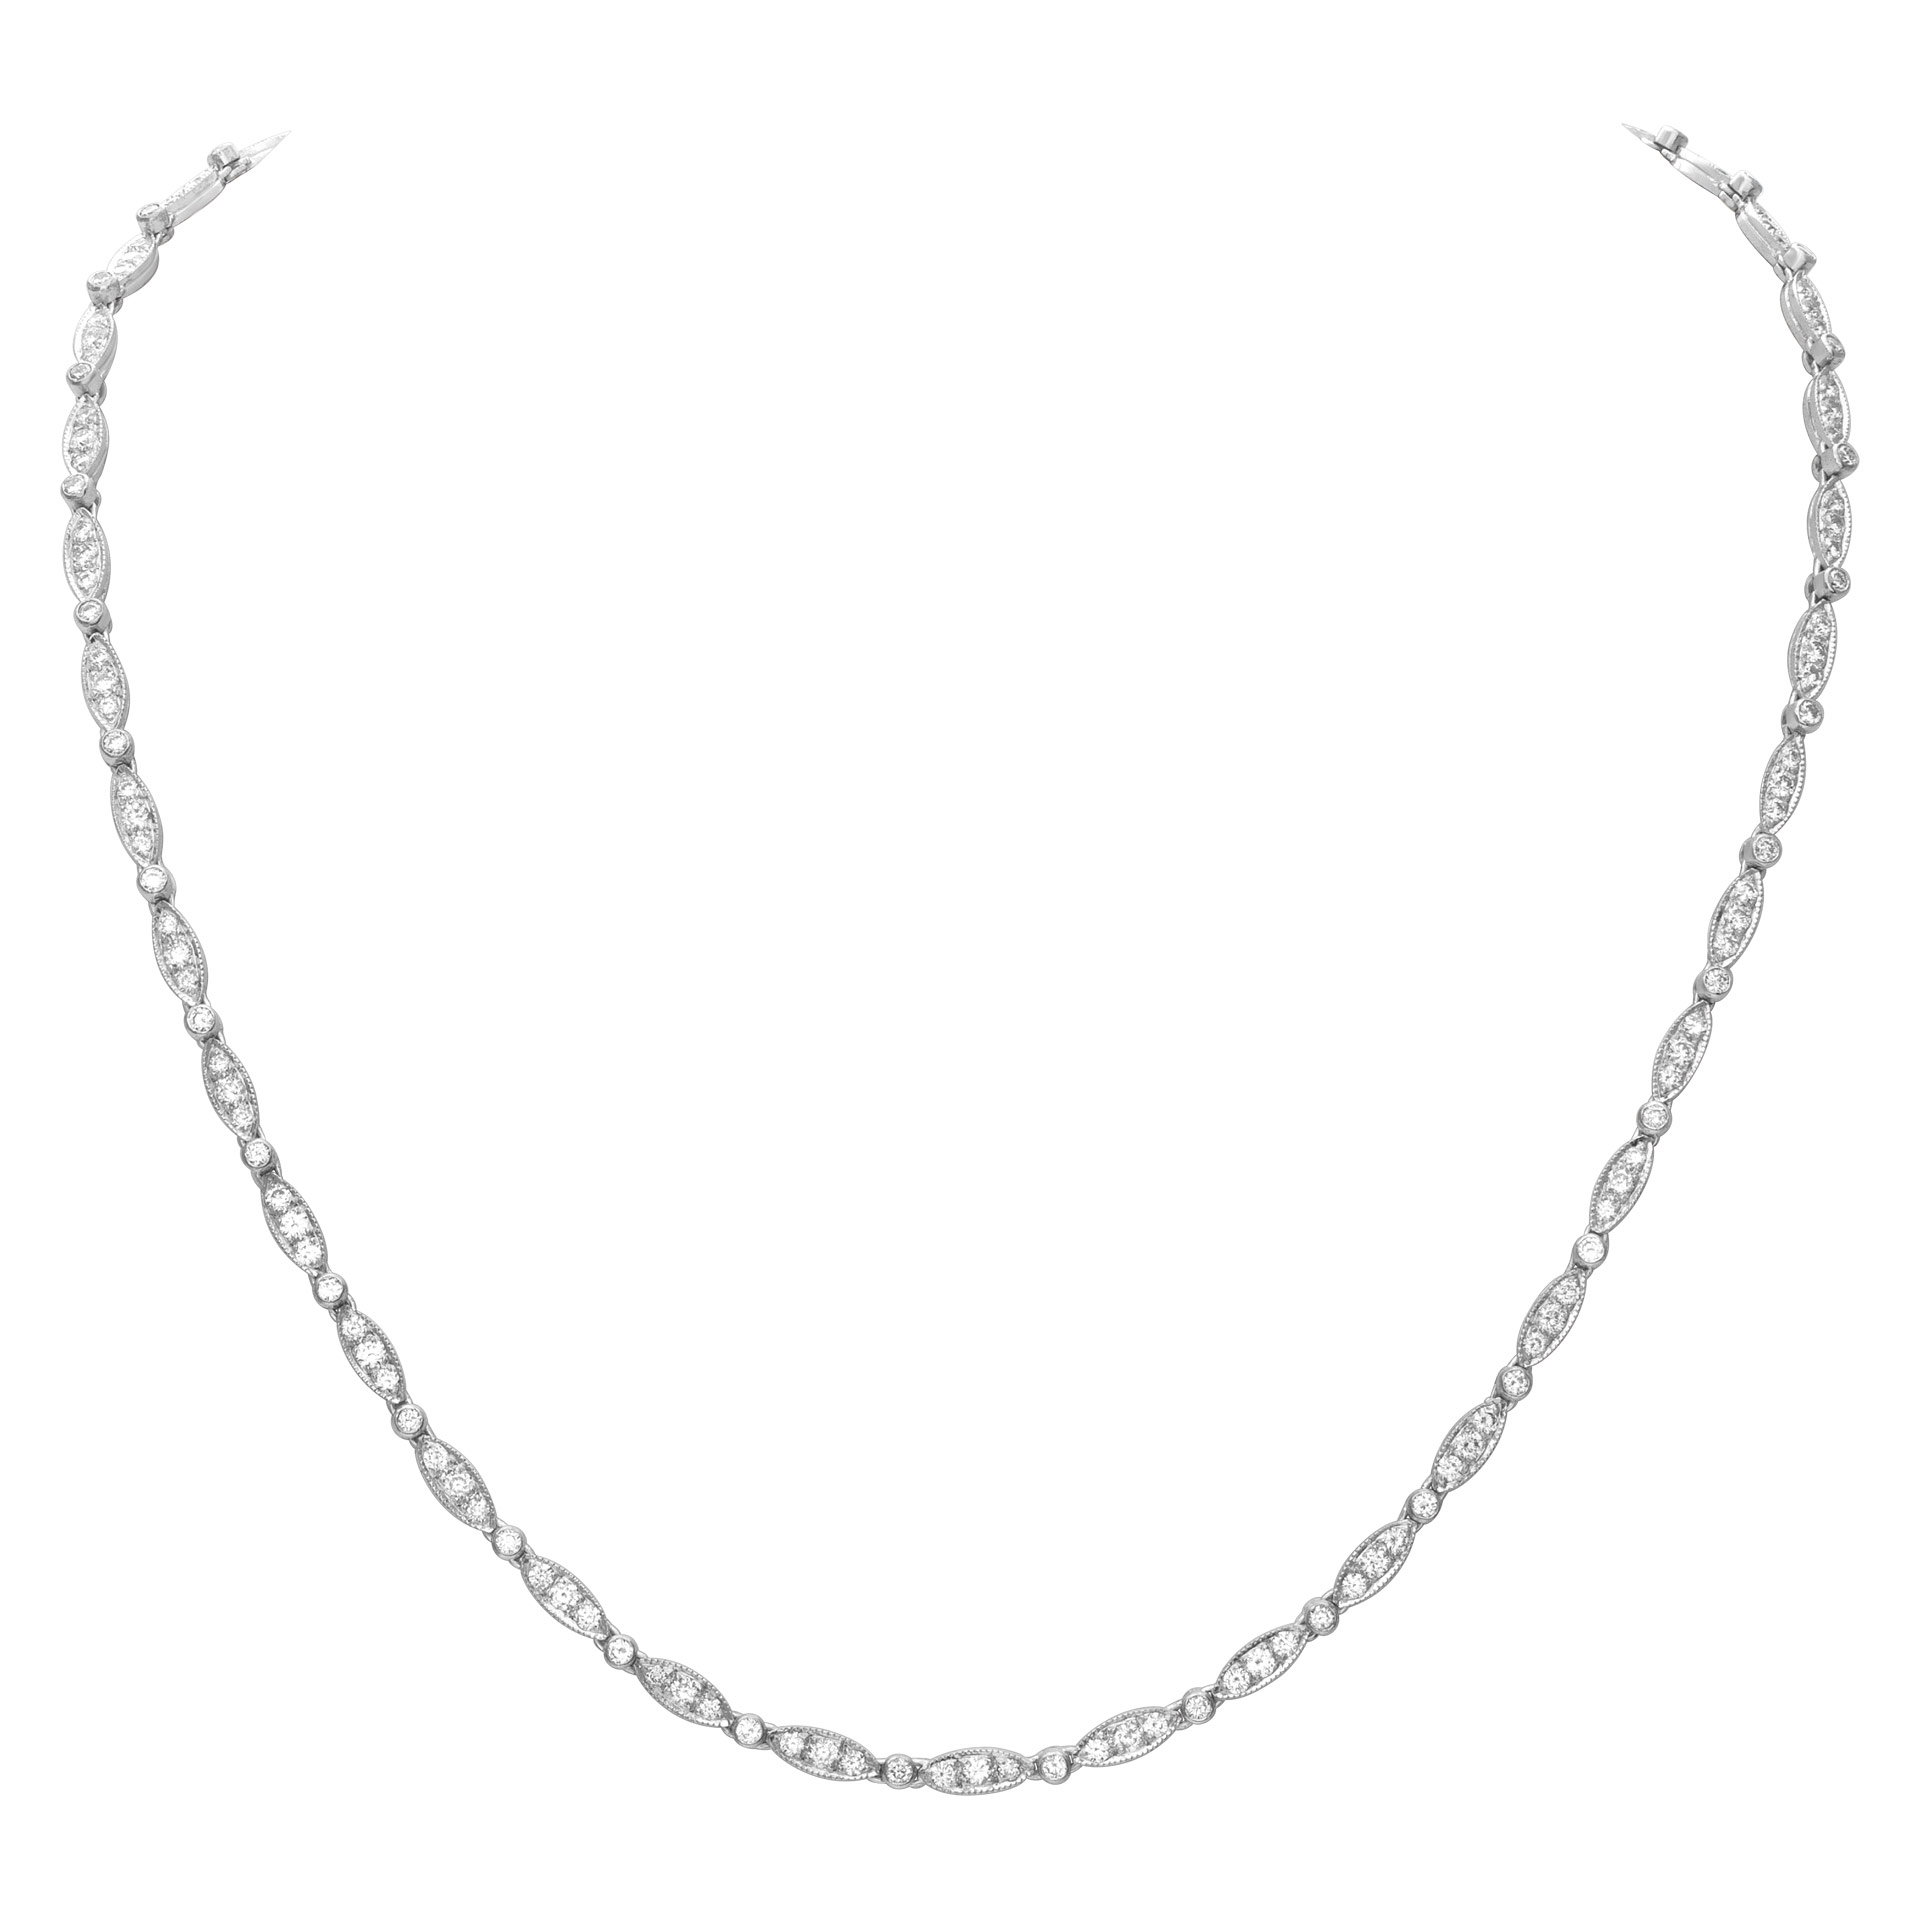 Diamond necklace in 18k white gold,  over 2 carats round brilliant cut diamonds